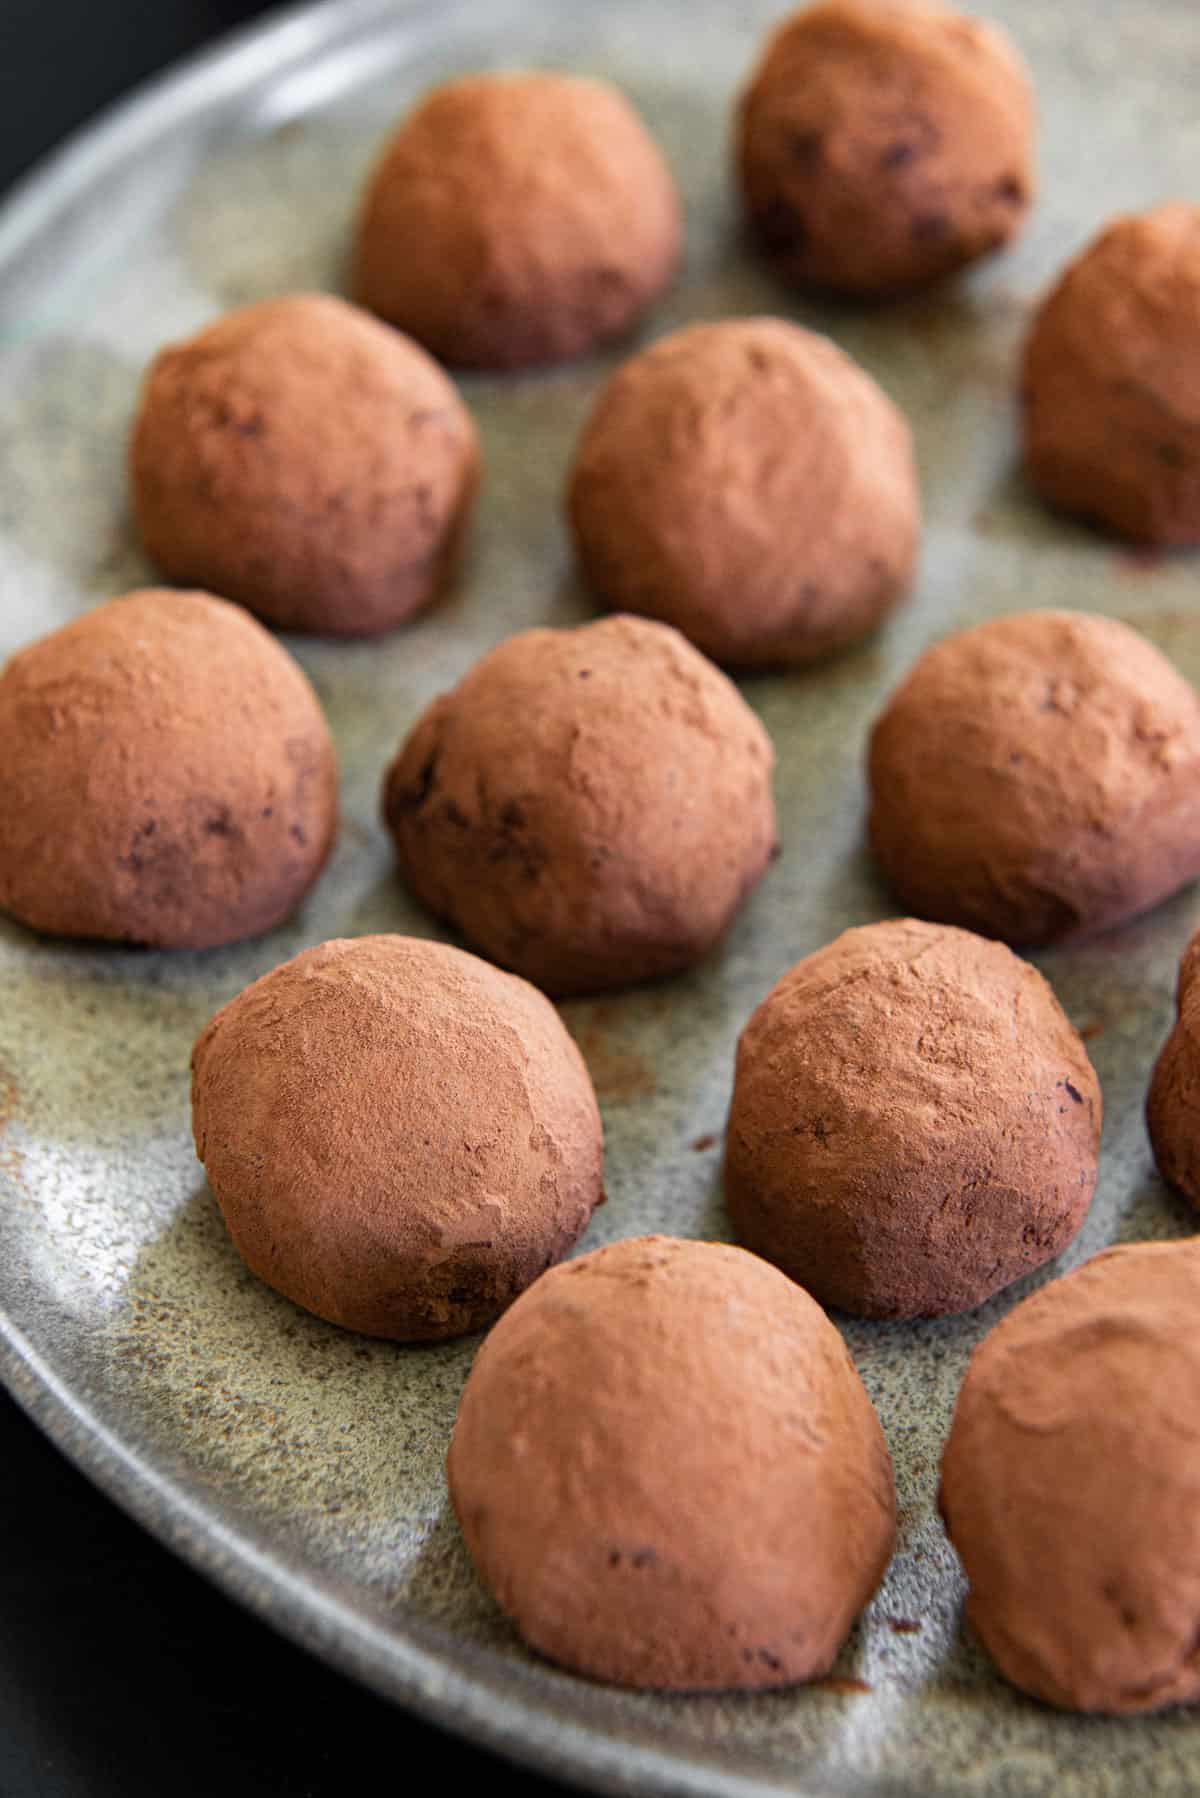 homemade chocolate truffles recipe